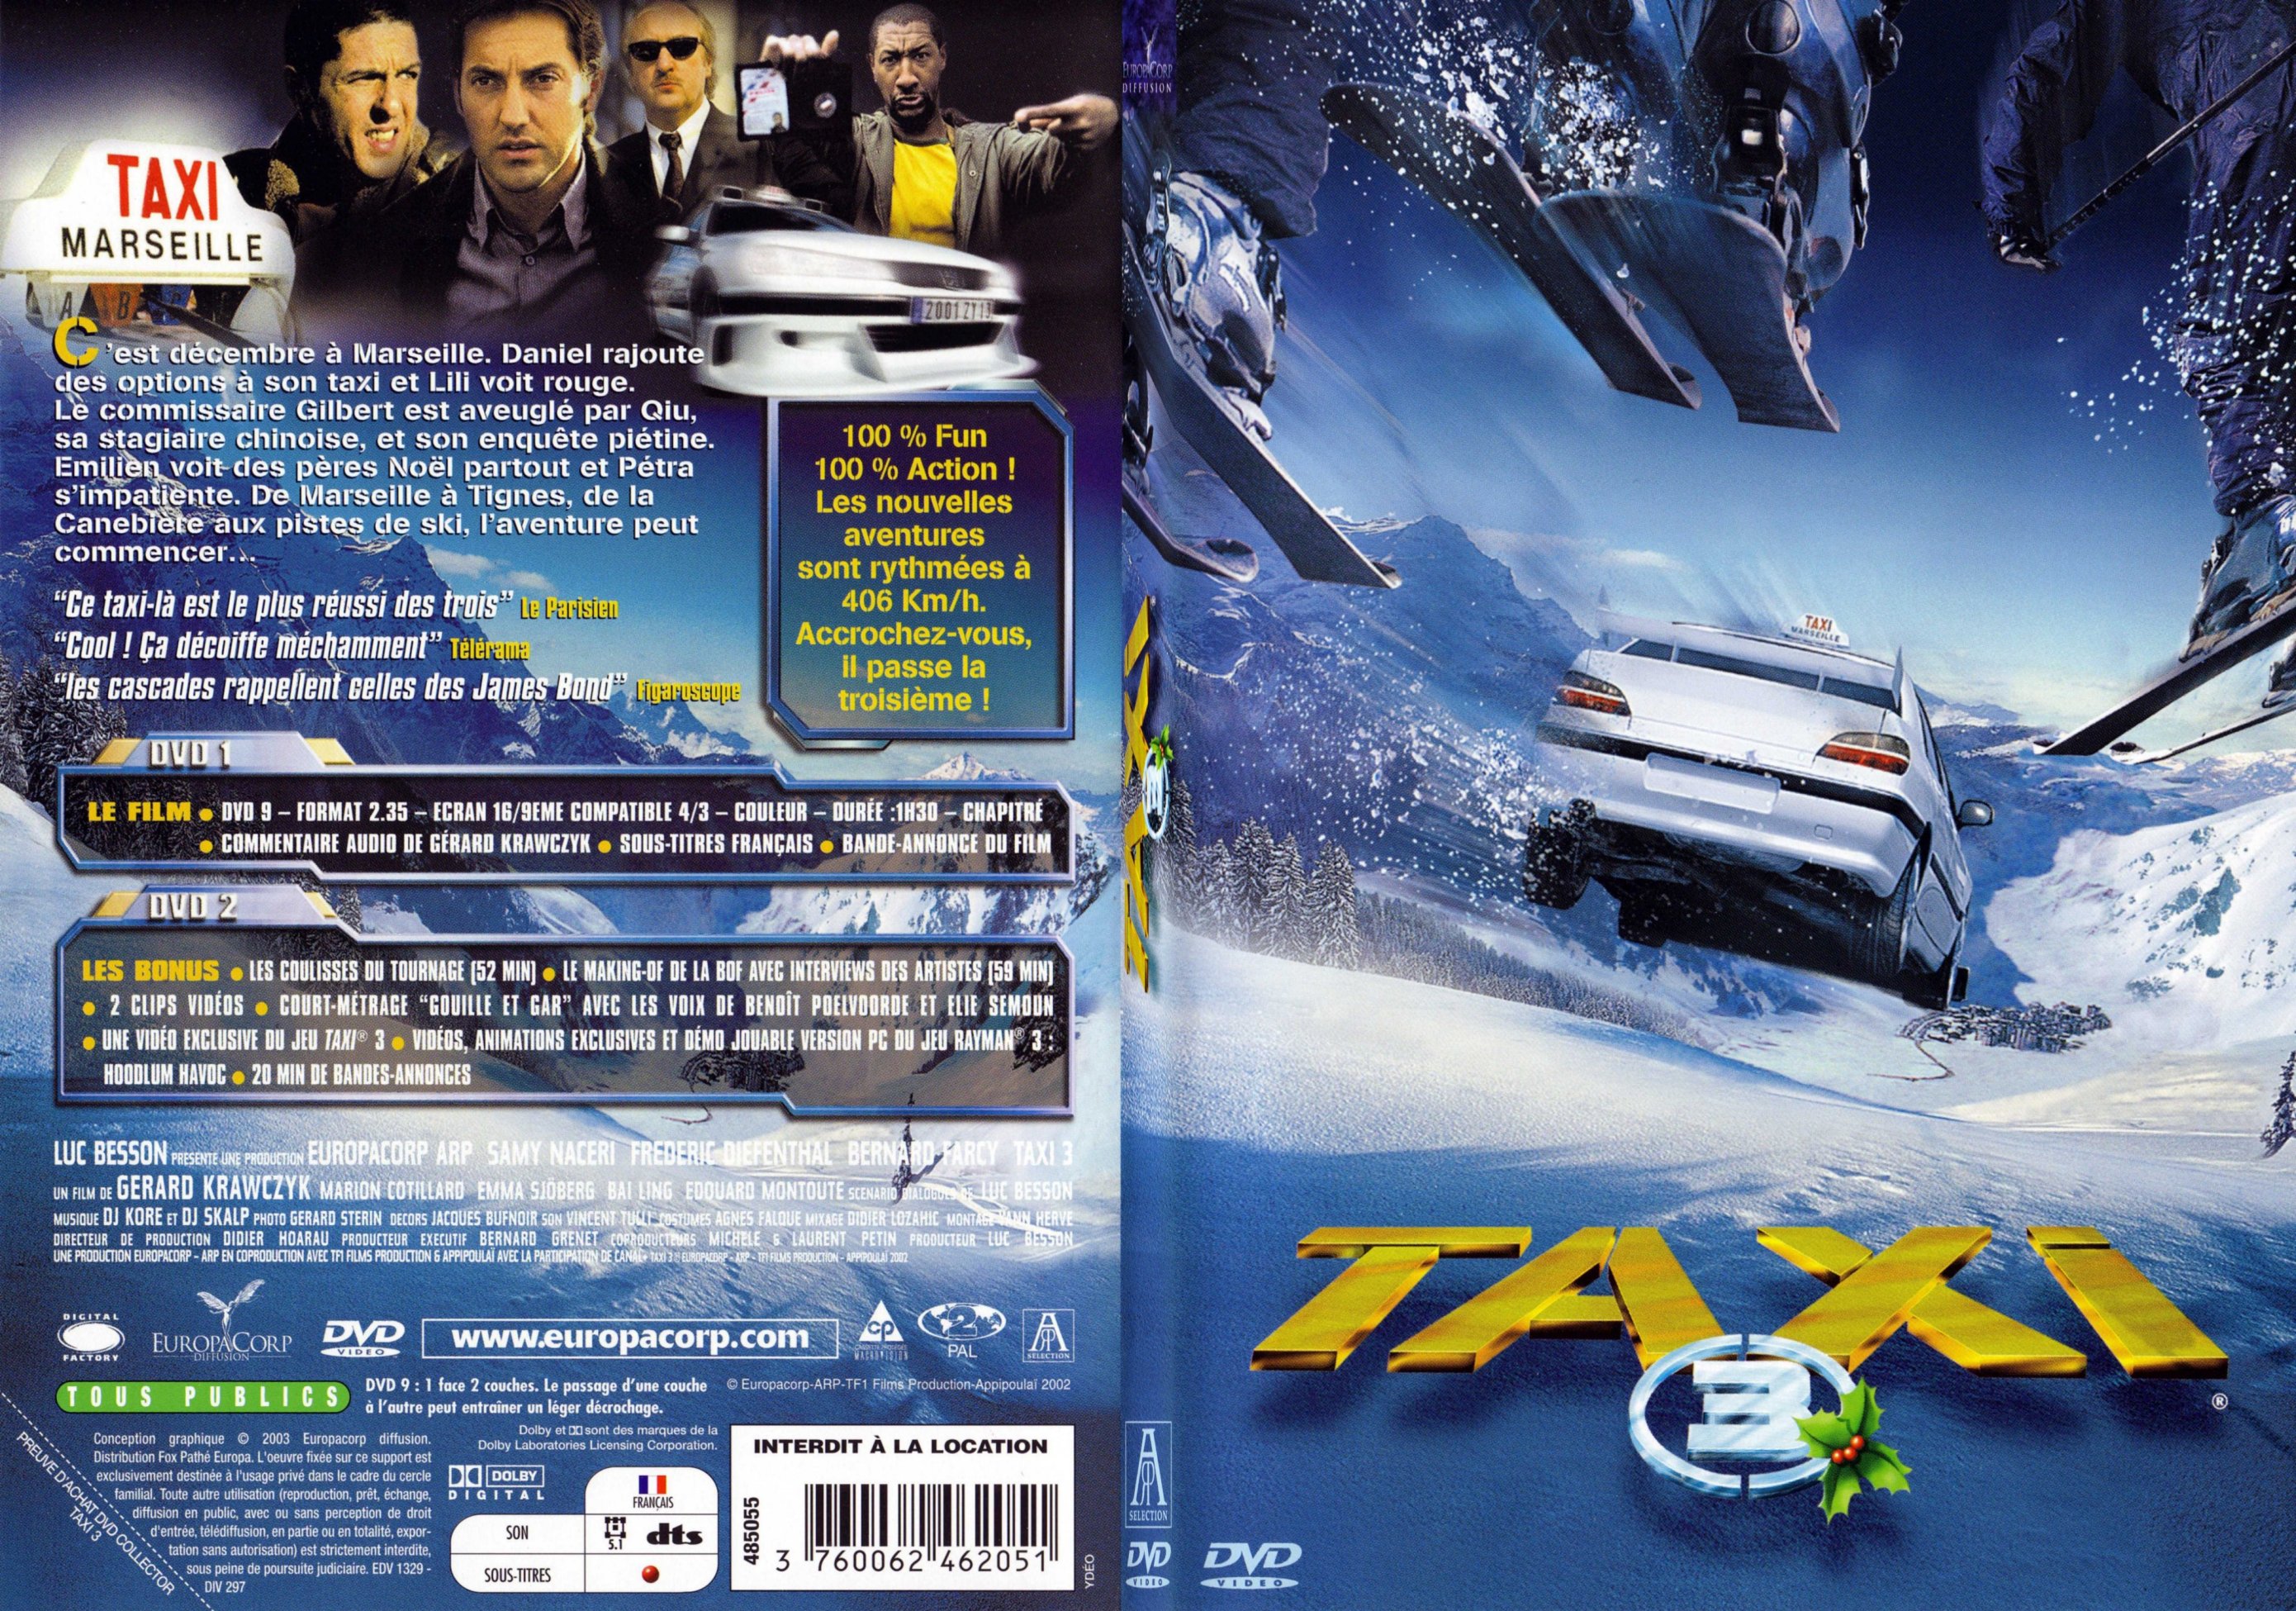 Jaquette DVD Taxi 3 - SLIM